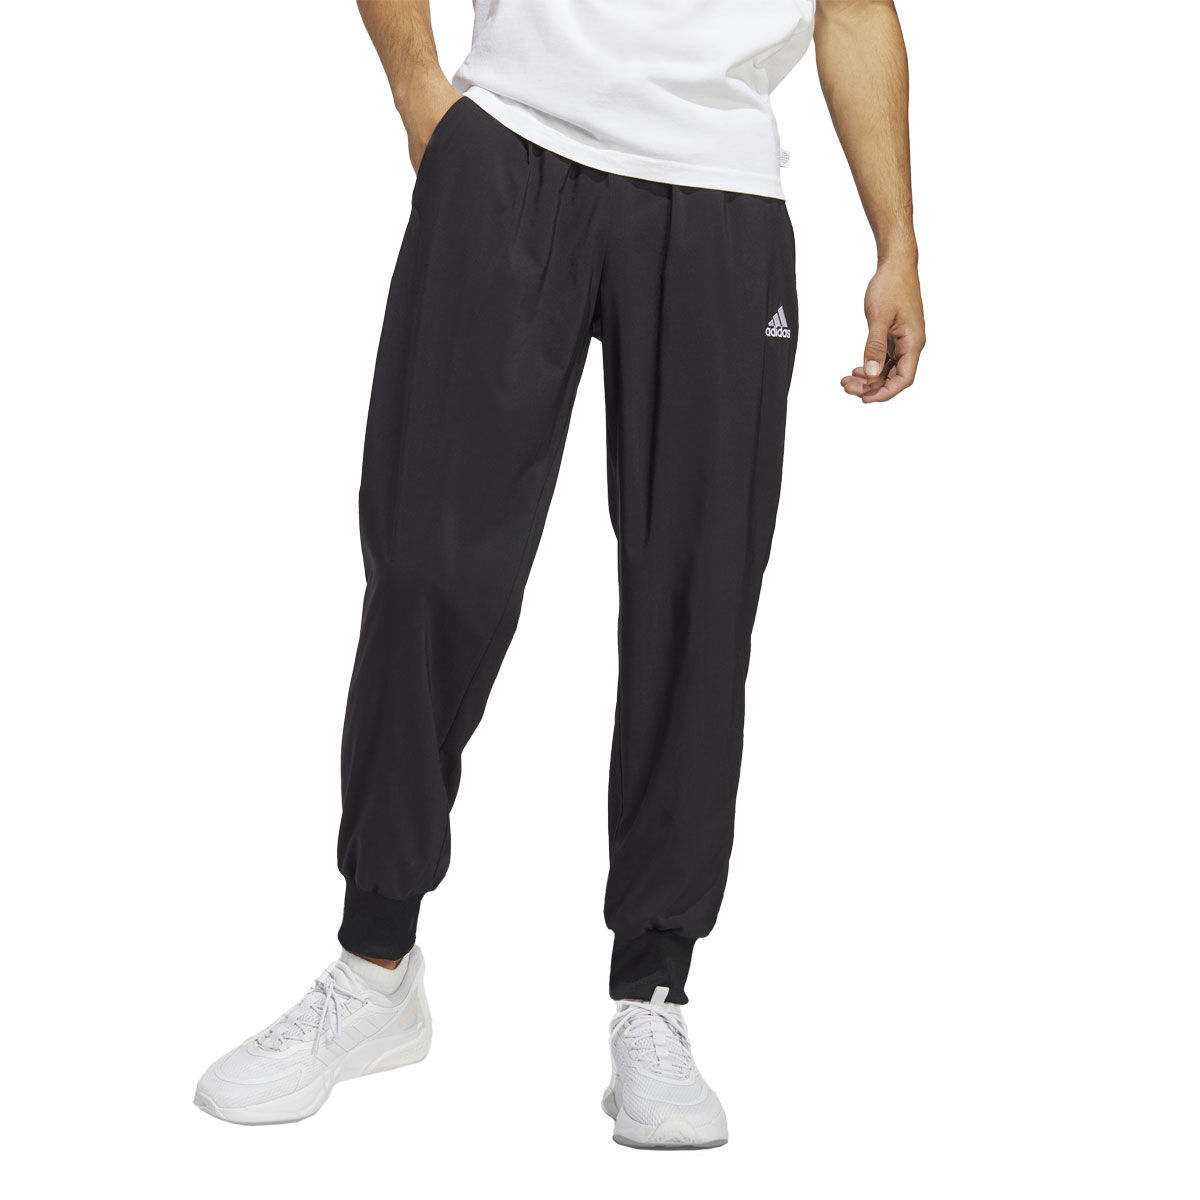 Adidas Track Pants - Buy Adidas Track Pants Online | Myntra